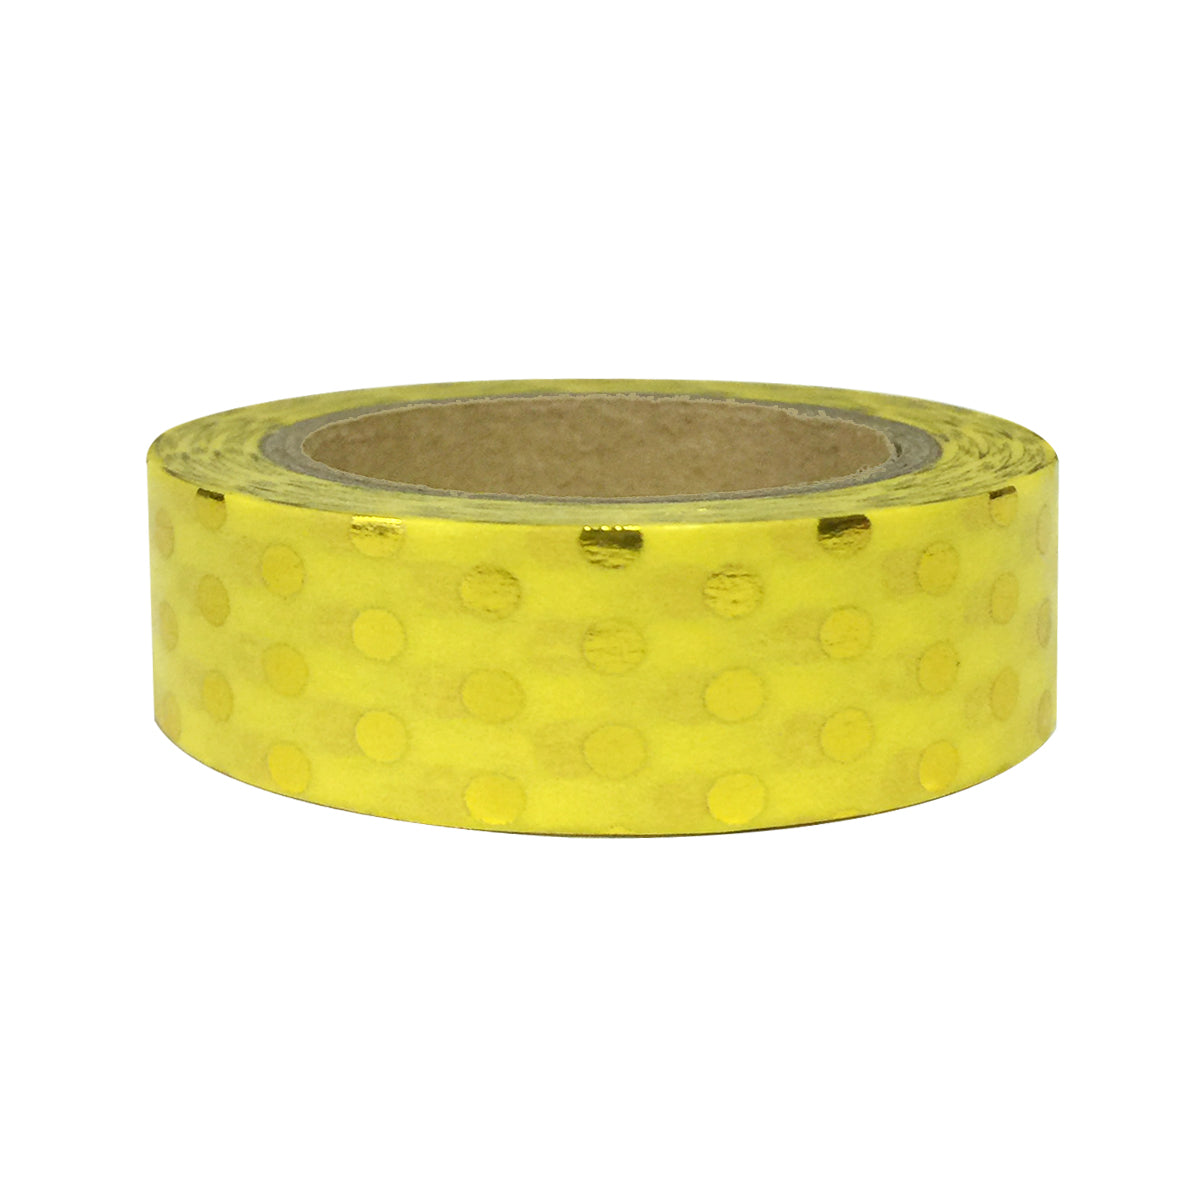 Wrapables Colorful Washi Masking Tape, Metallic Gold Diagonal Stripes on Yellow